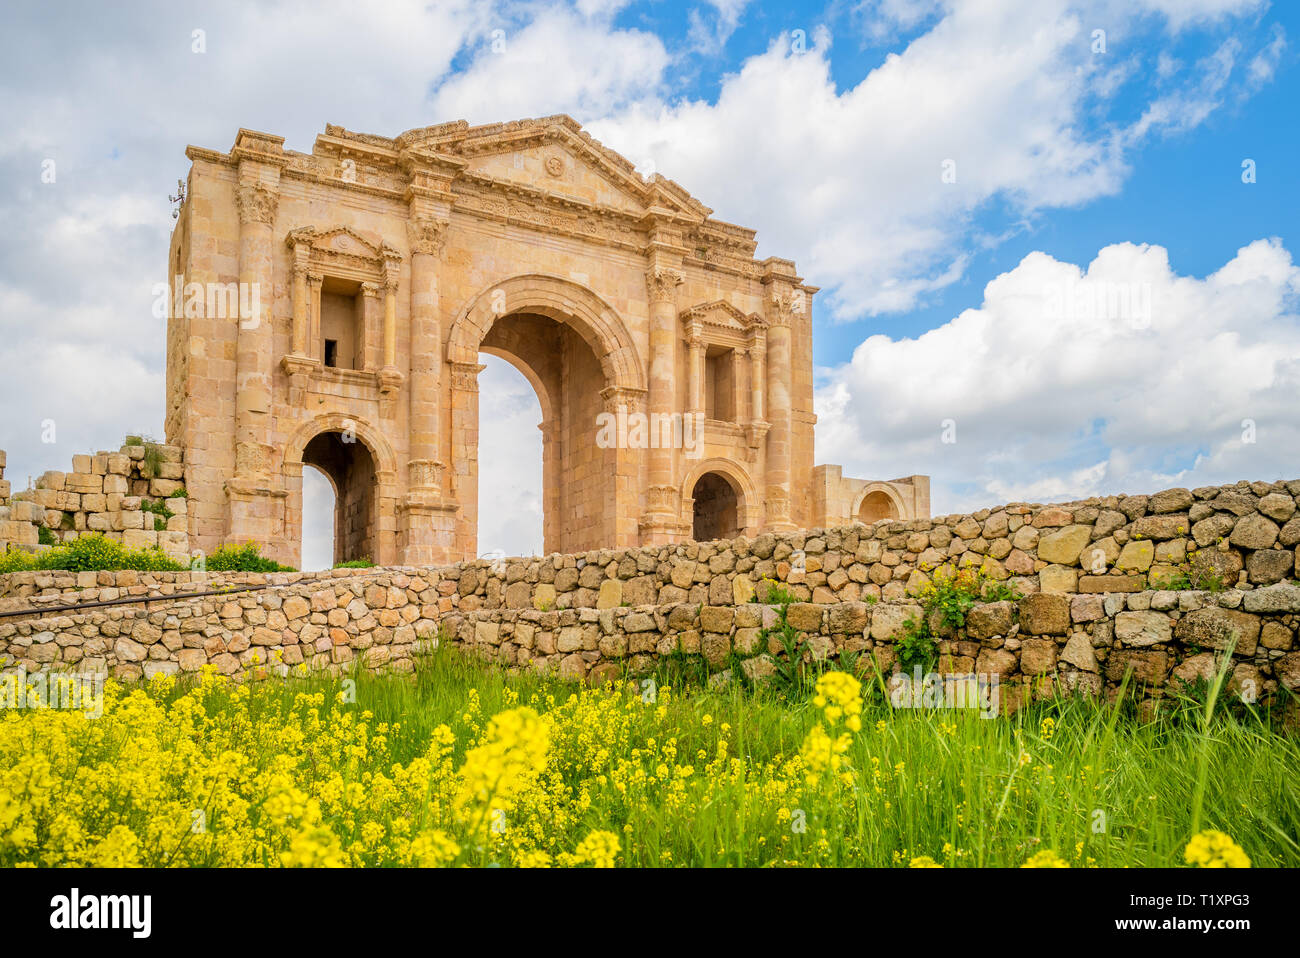 Arch of Hadrian, gate of jerash, amman, Jordan Stock Photo